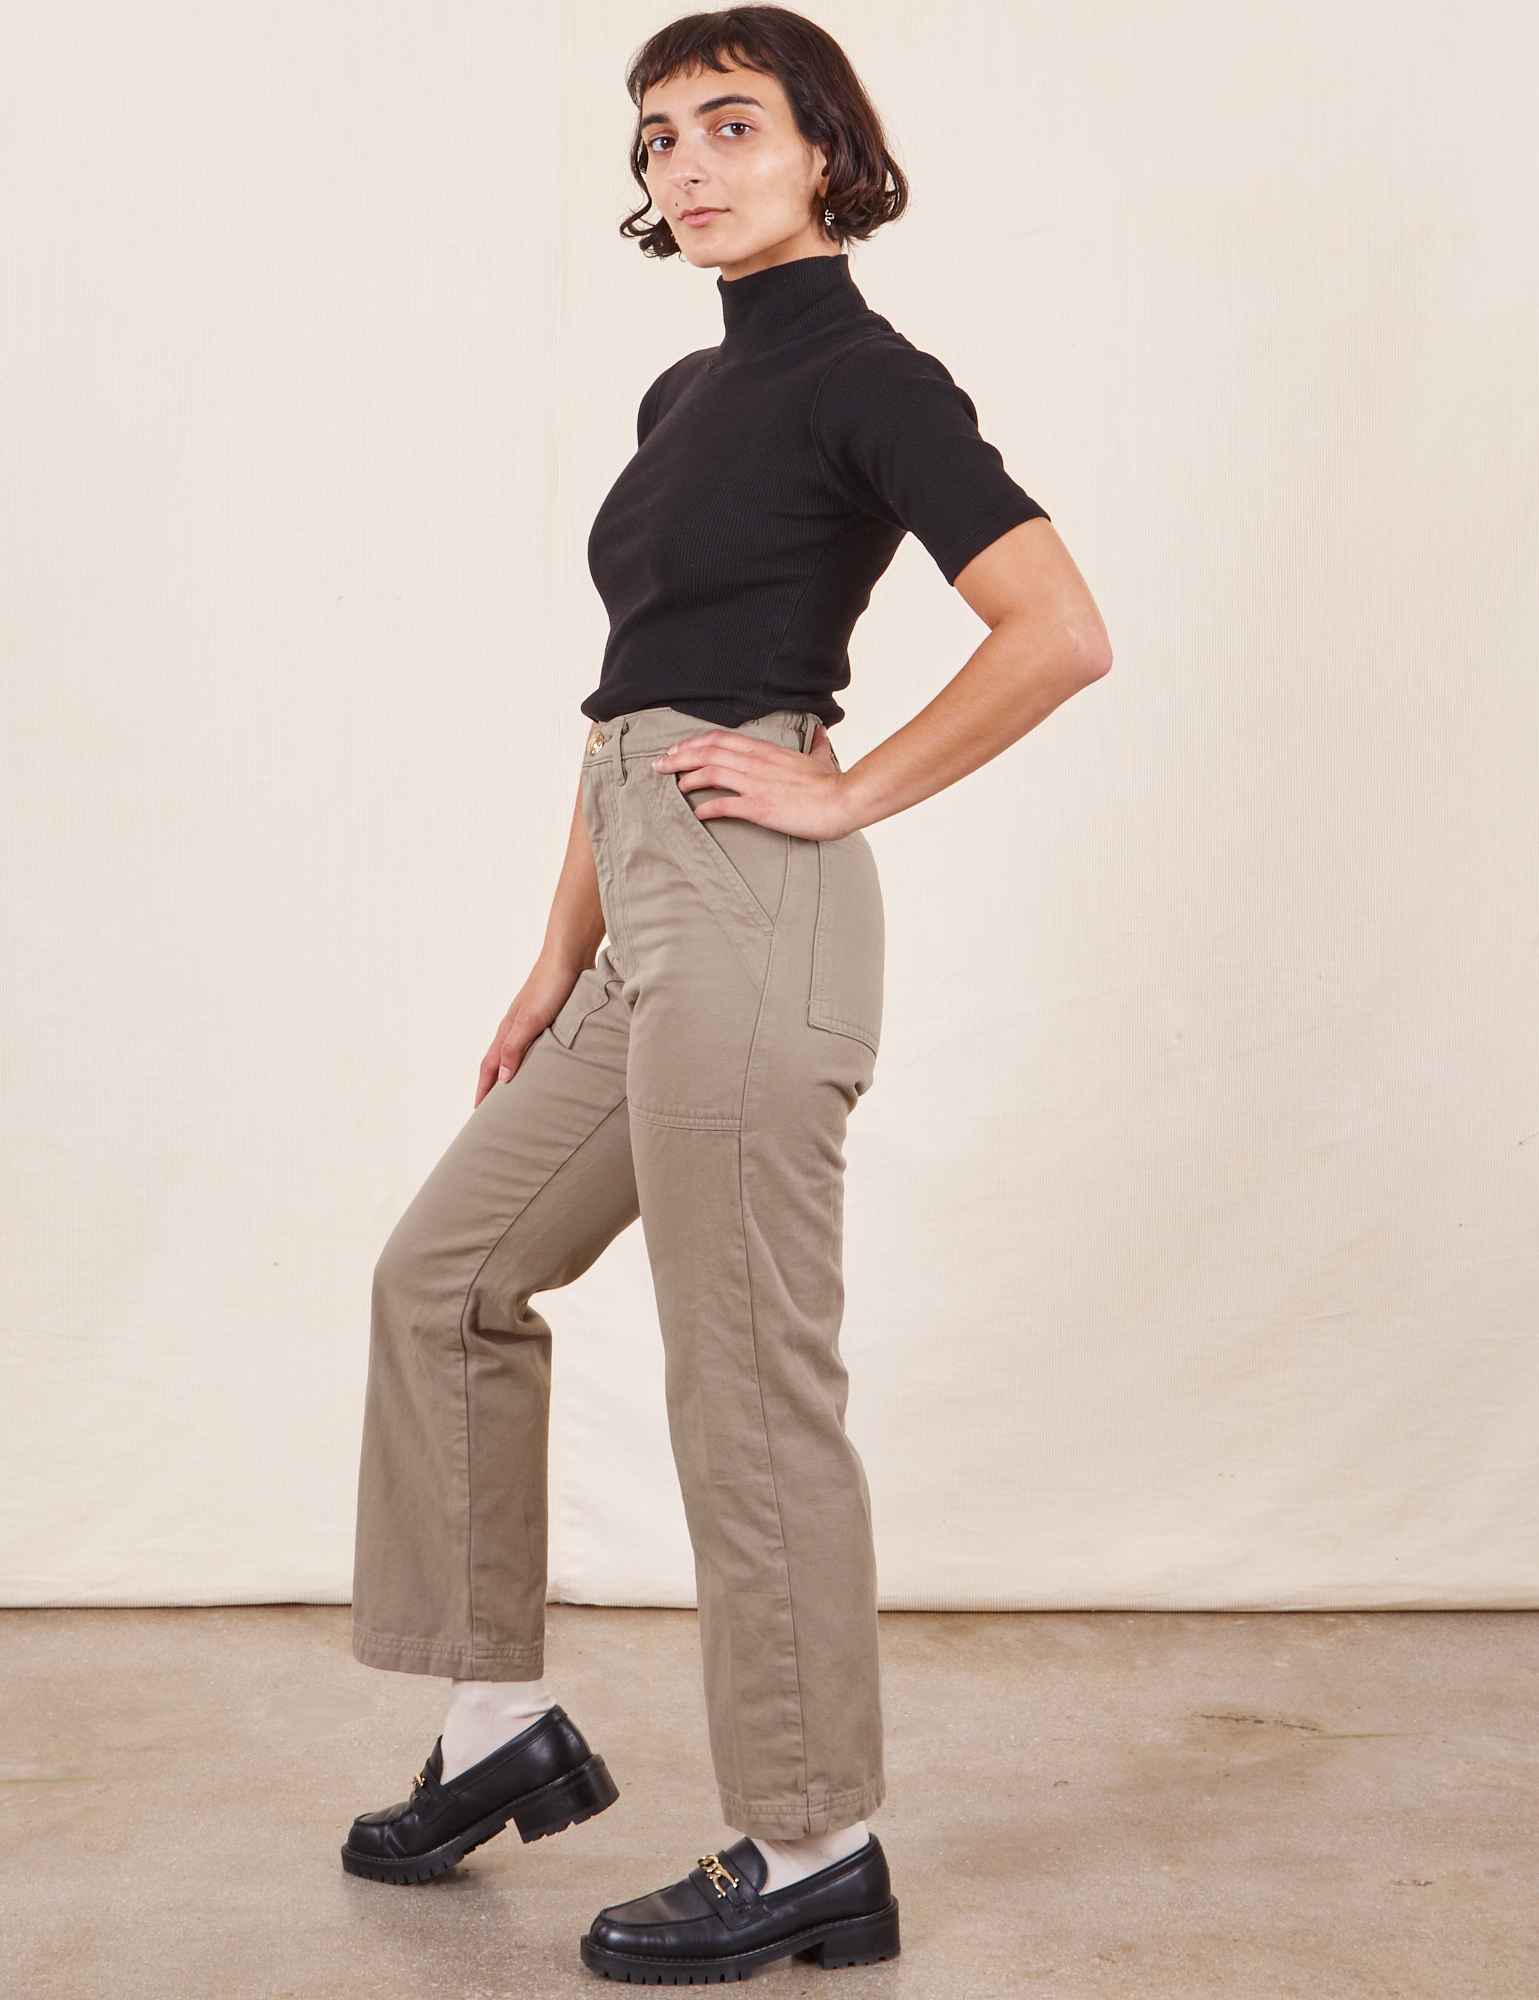 Work Pants in Khaki Grey side view on Soraya wearing black 1/2 Sleeve Turtleneck